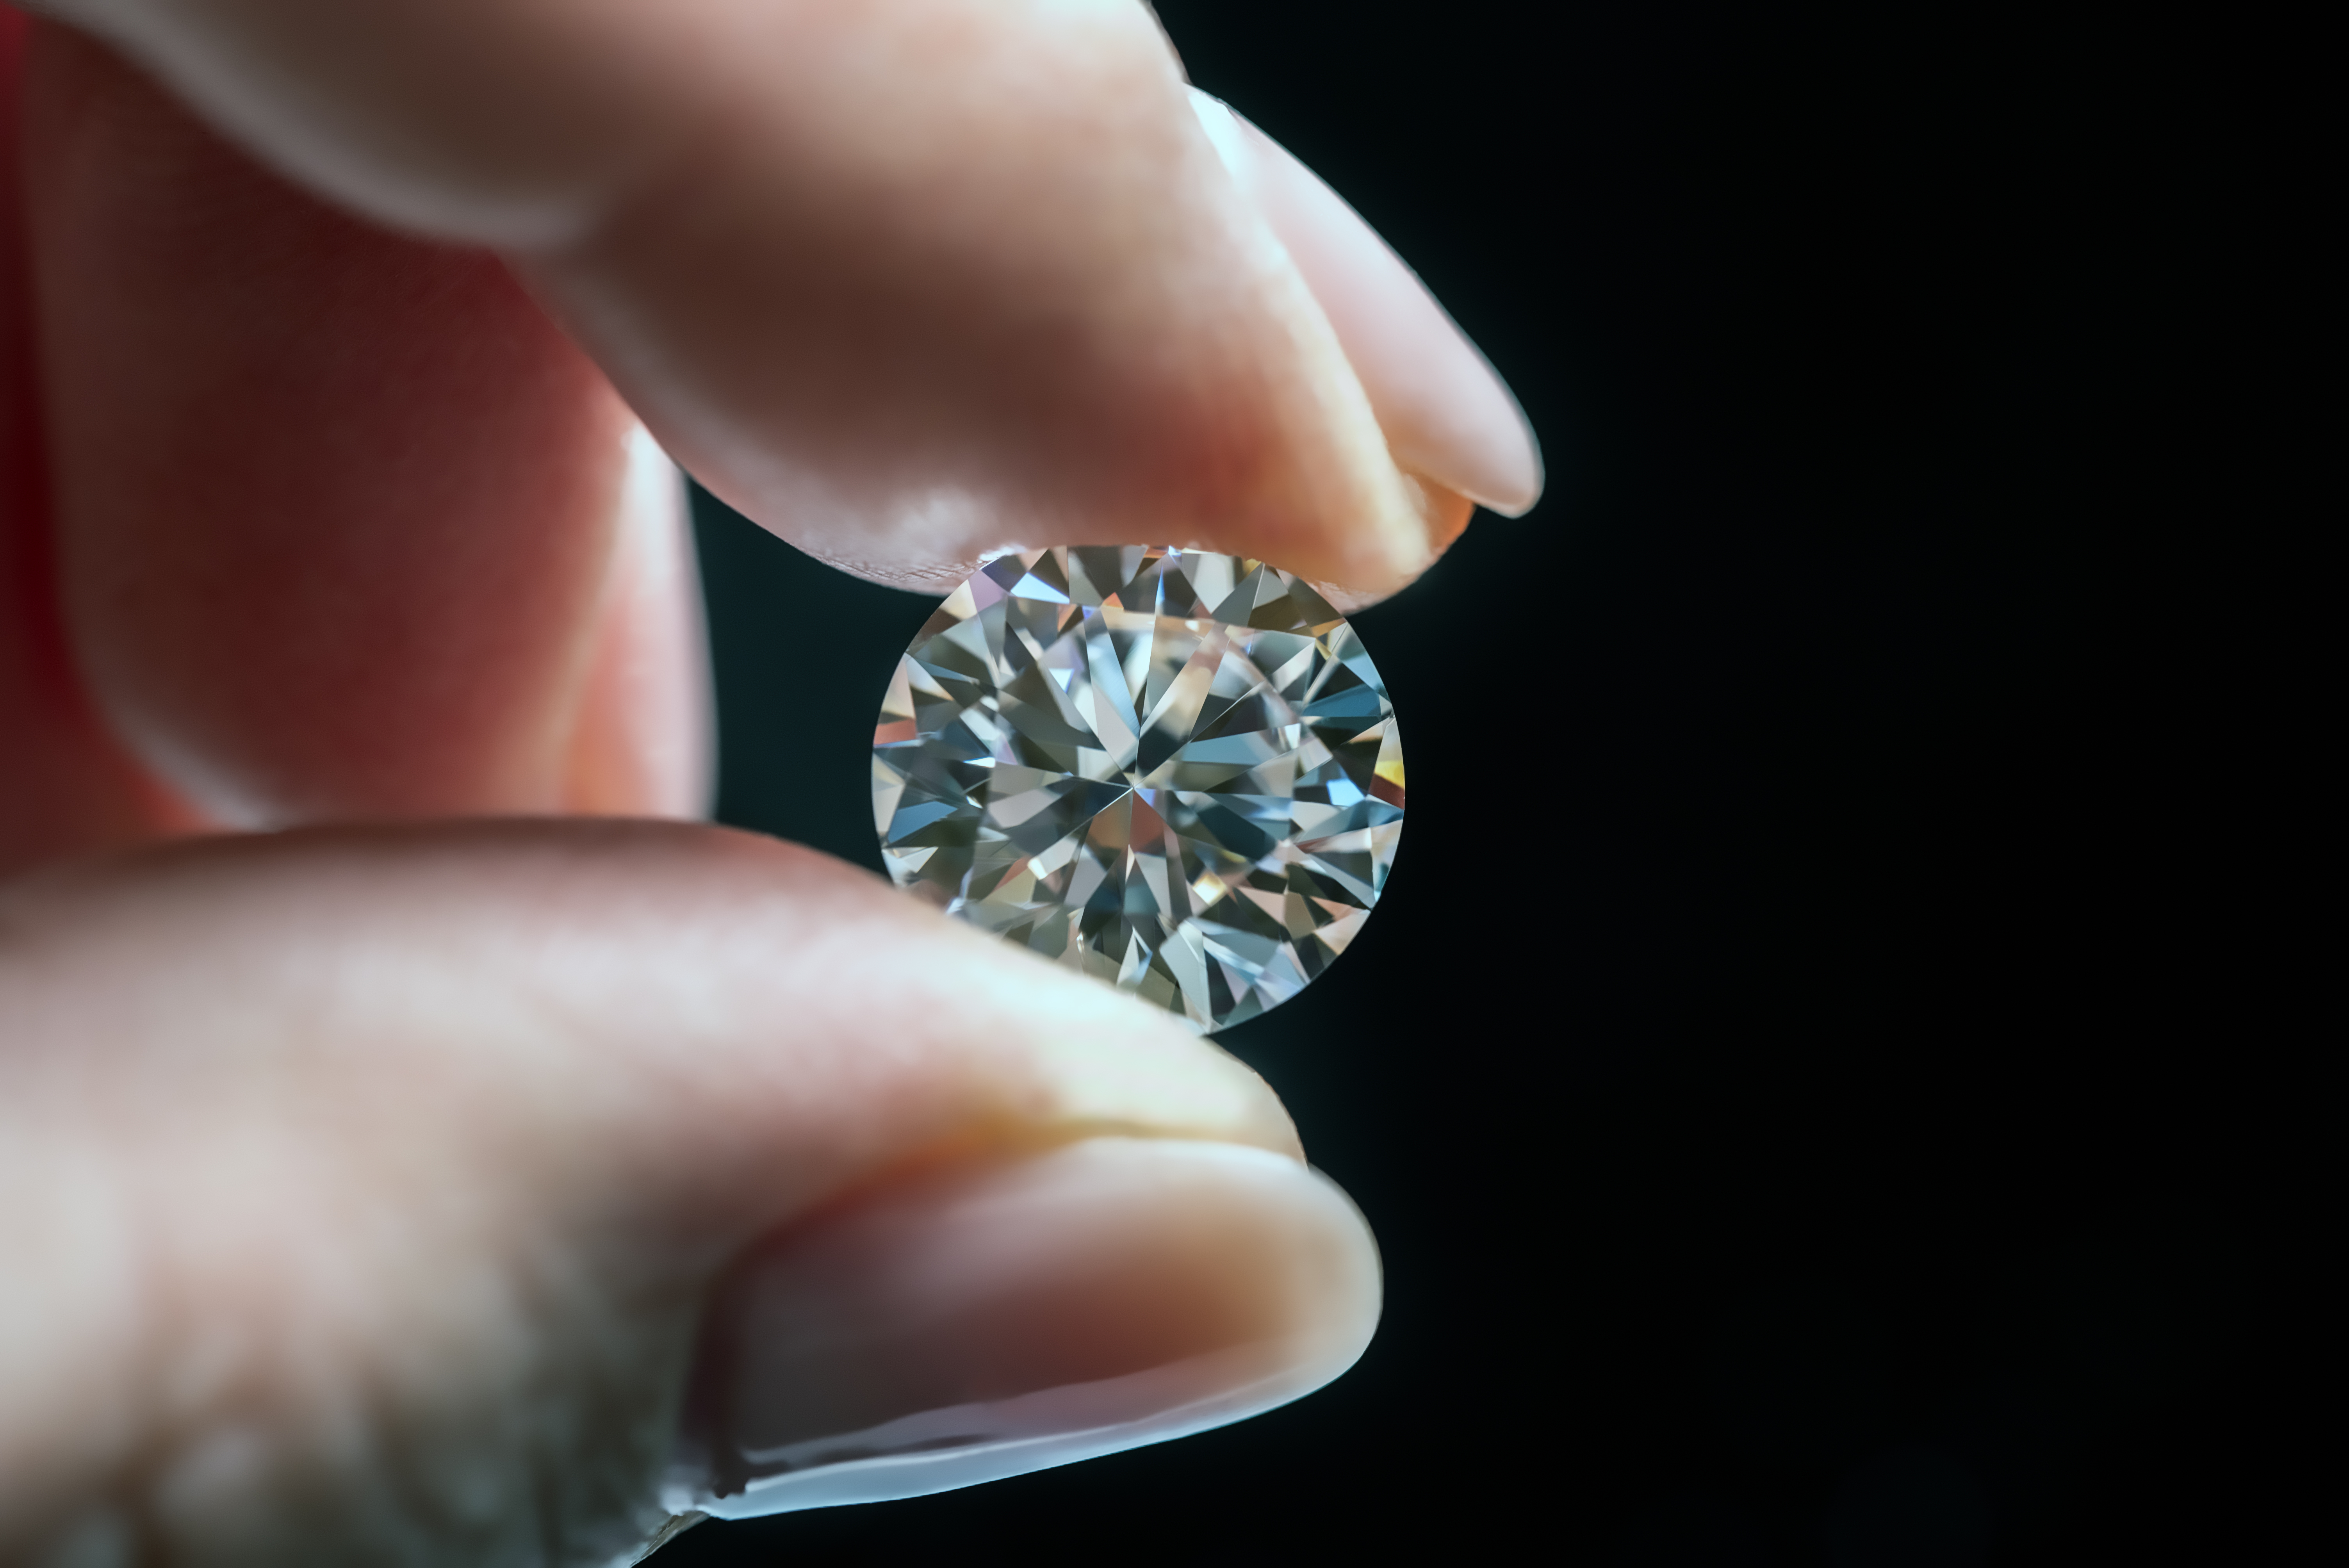 Mano femenina sujetando un diamante | Fuente: Shutterstock.com